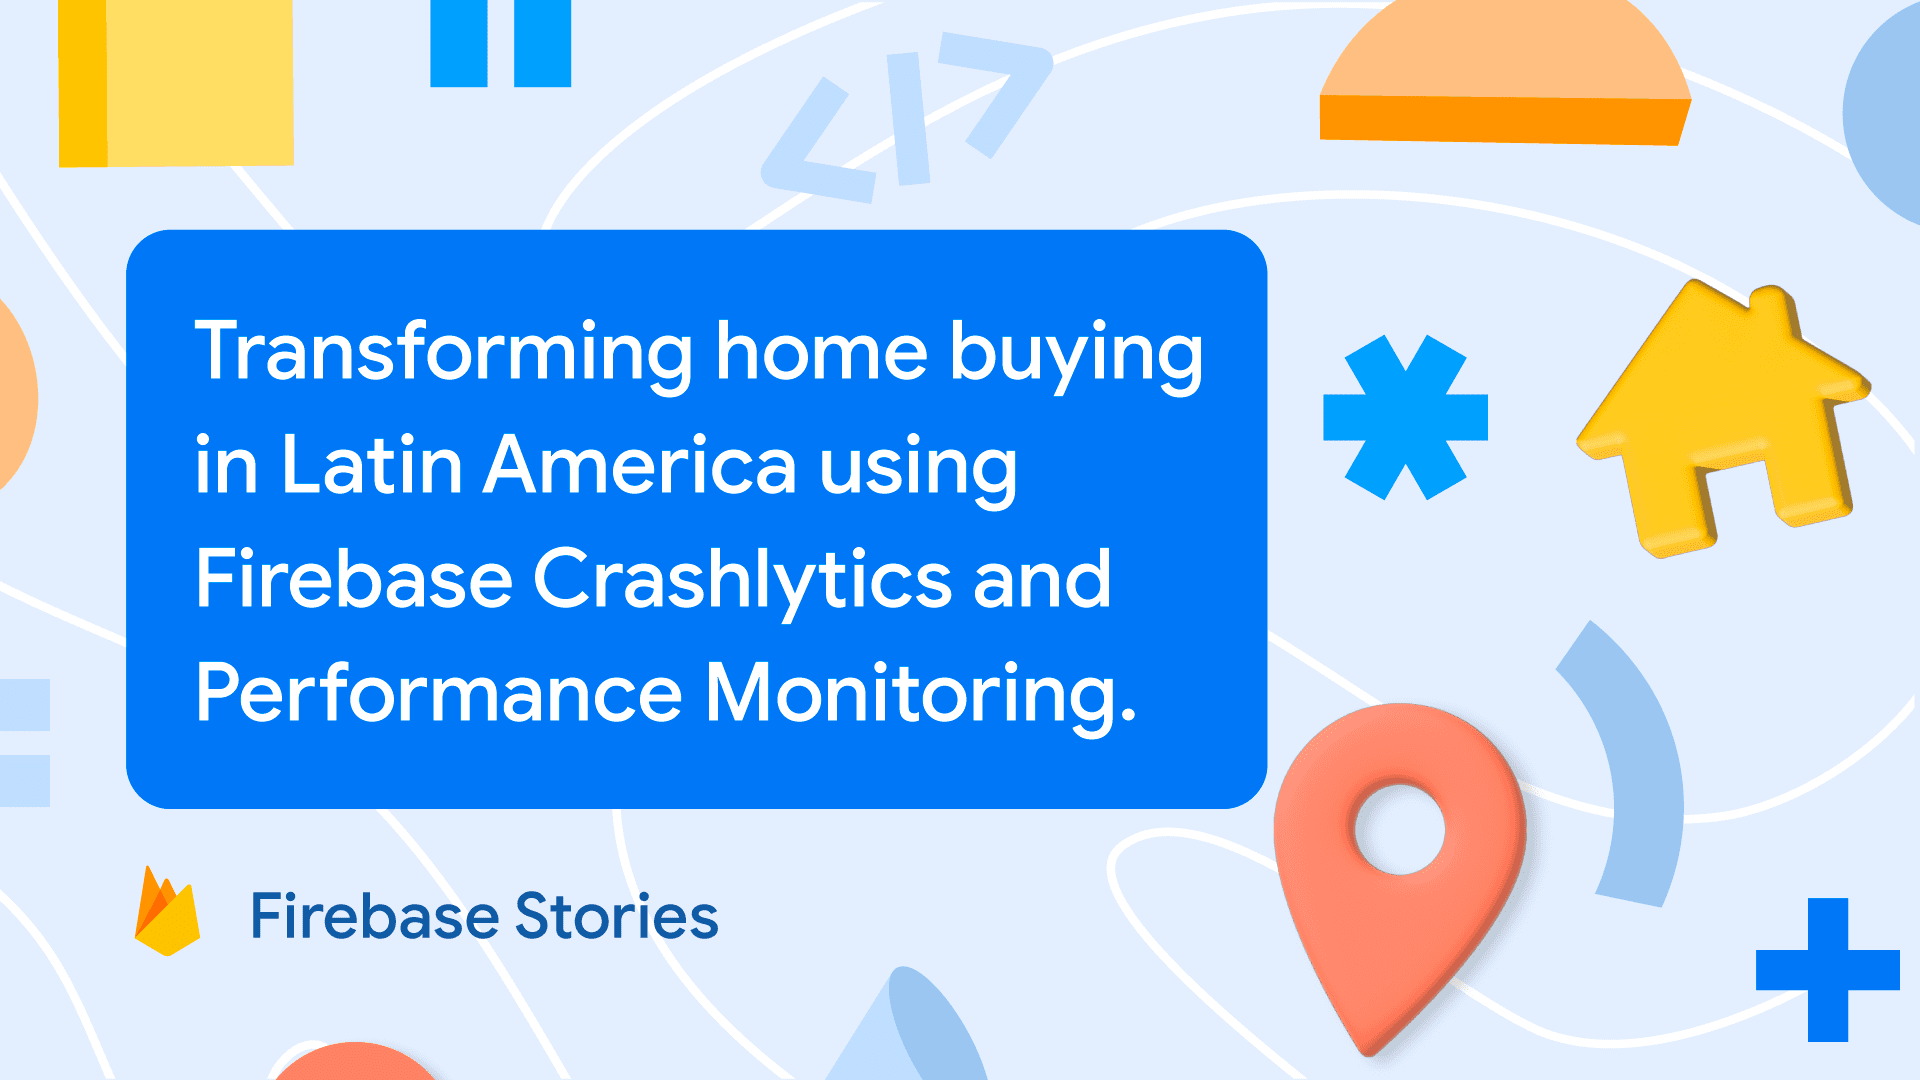 LaHaus: Firebase Crashlytics 및 Performance Monitoring을 사용하여 중남미의 주택 구매 혁신
